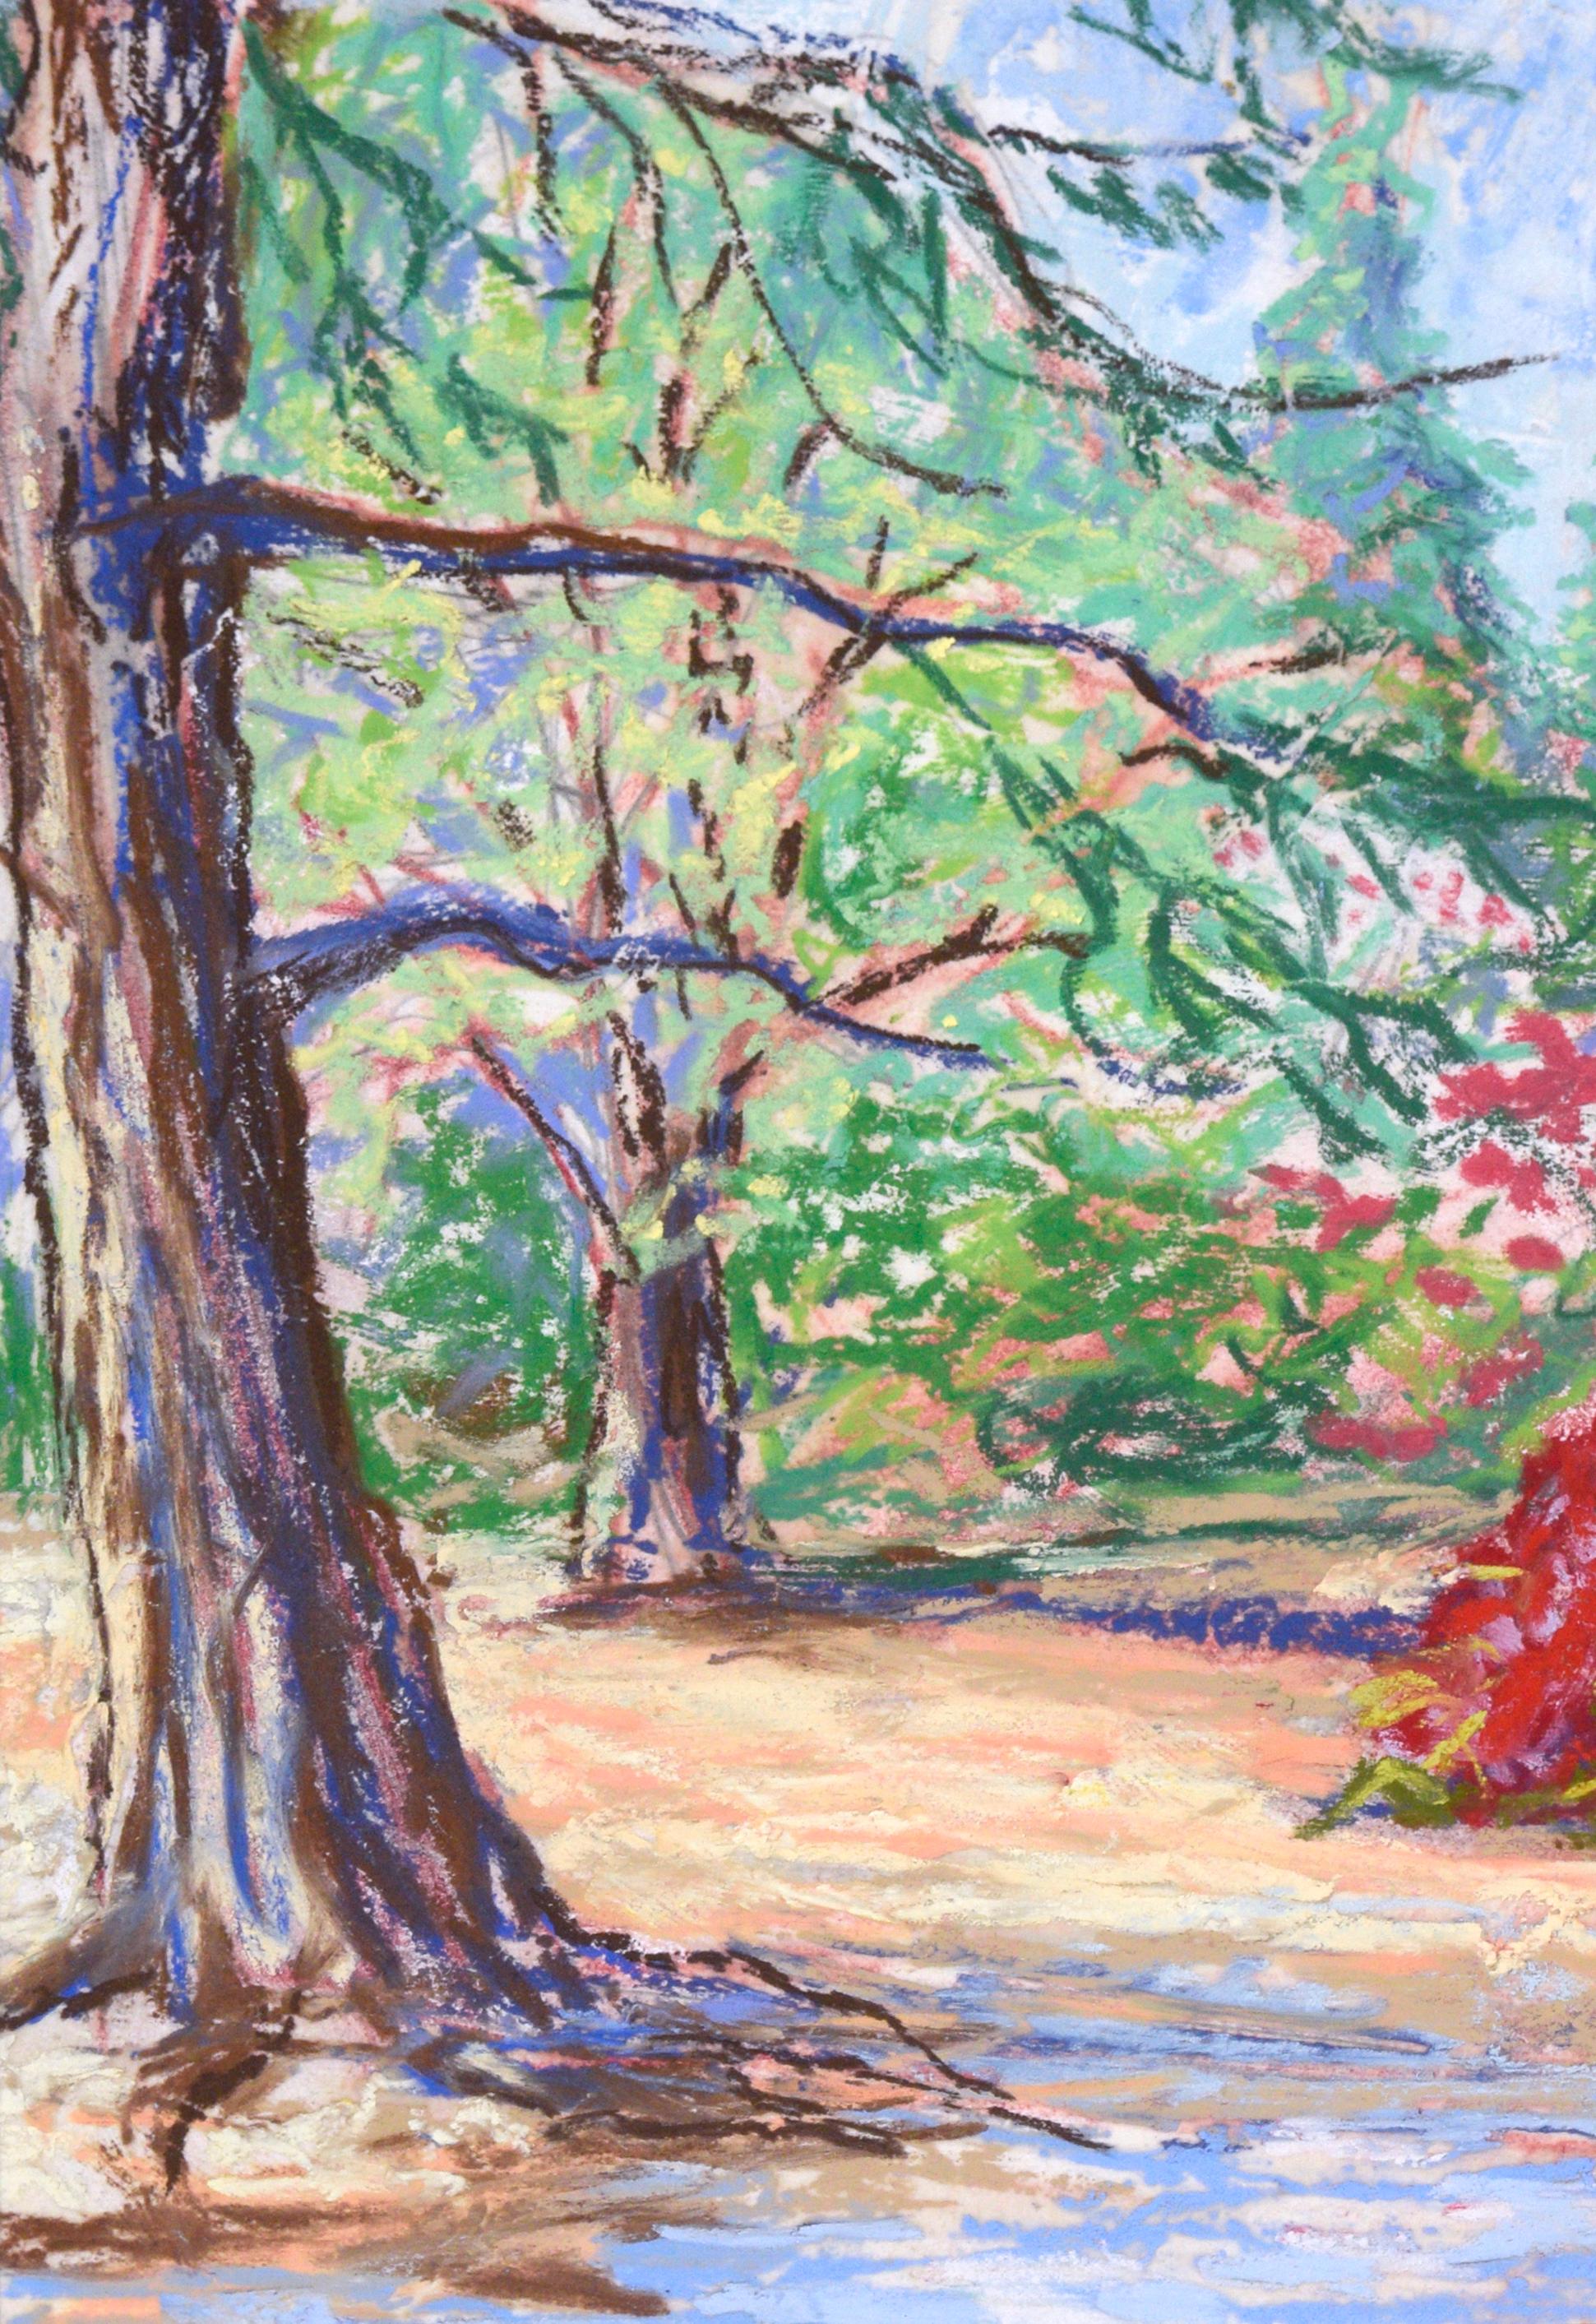 Over the Pastel Garden Wall - New England - Original Oil Pastel on Paper 1998 - Impressionist Art by Eileen Belanger